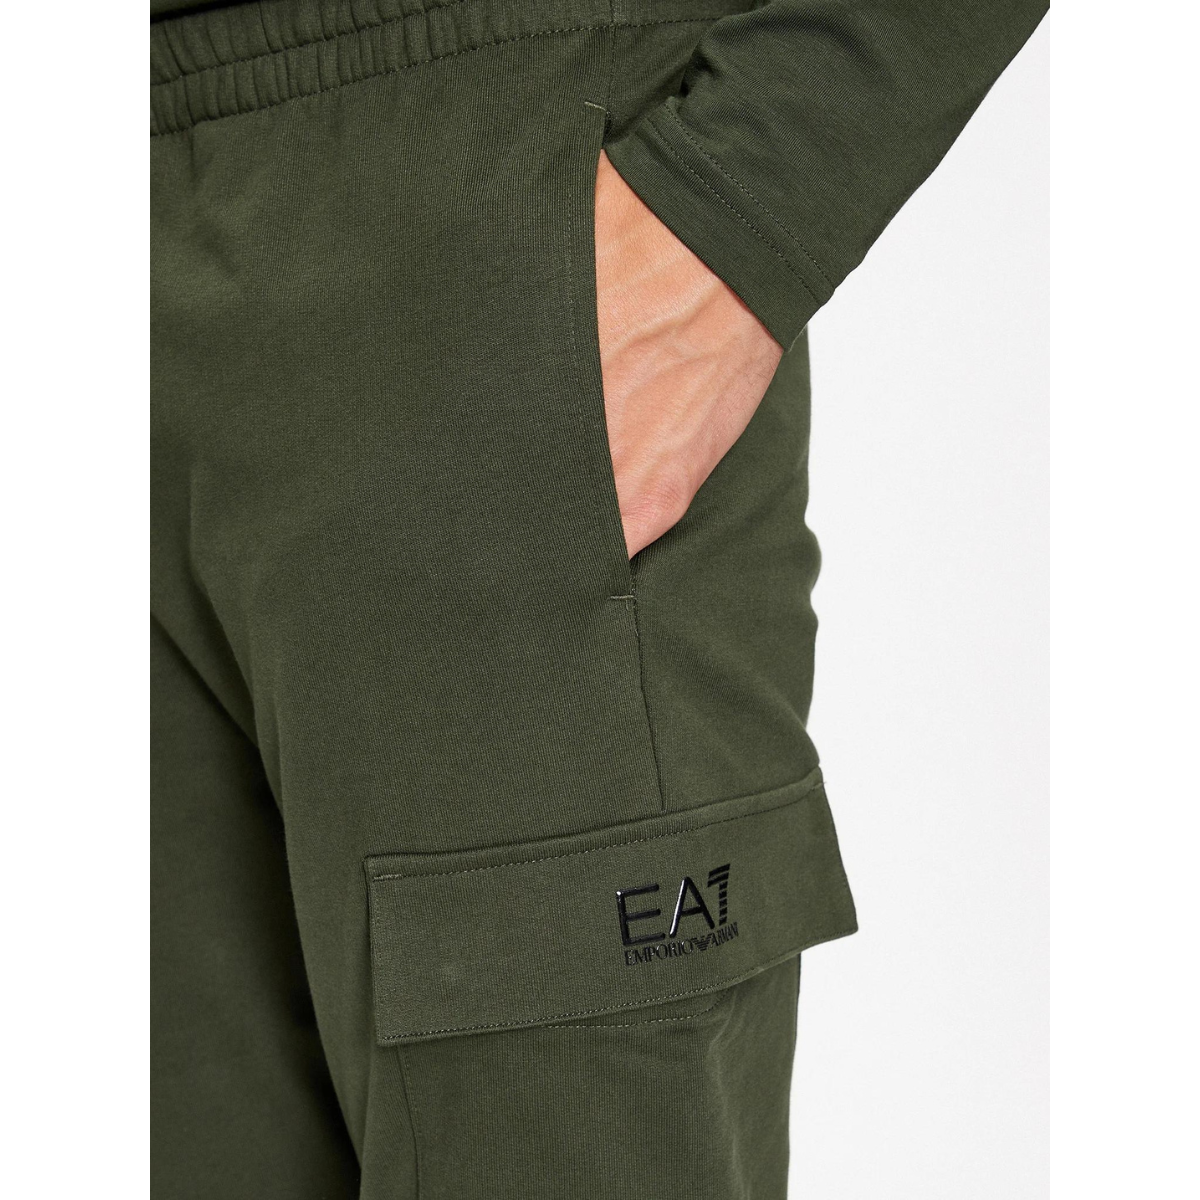 EA7 Giorgio Armani - Man Jersey Trouser - Duffel Bag